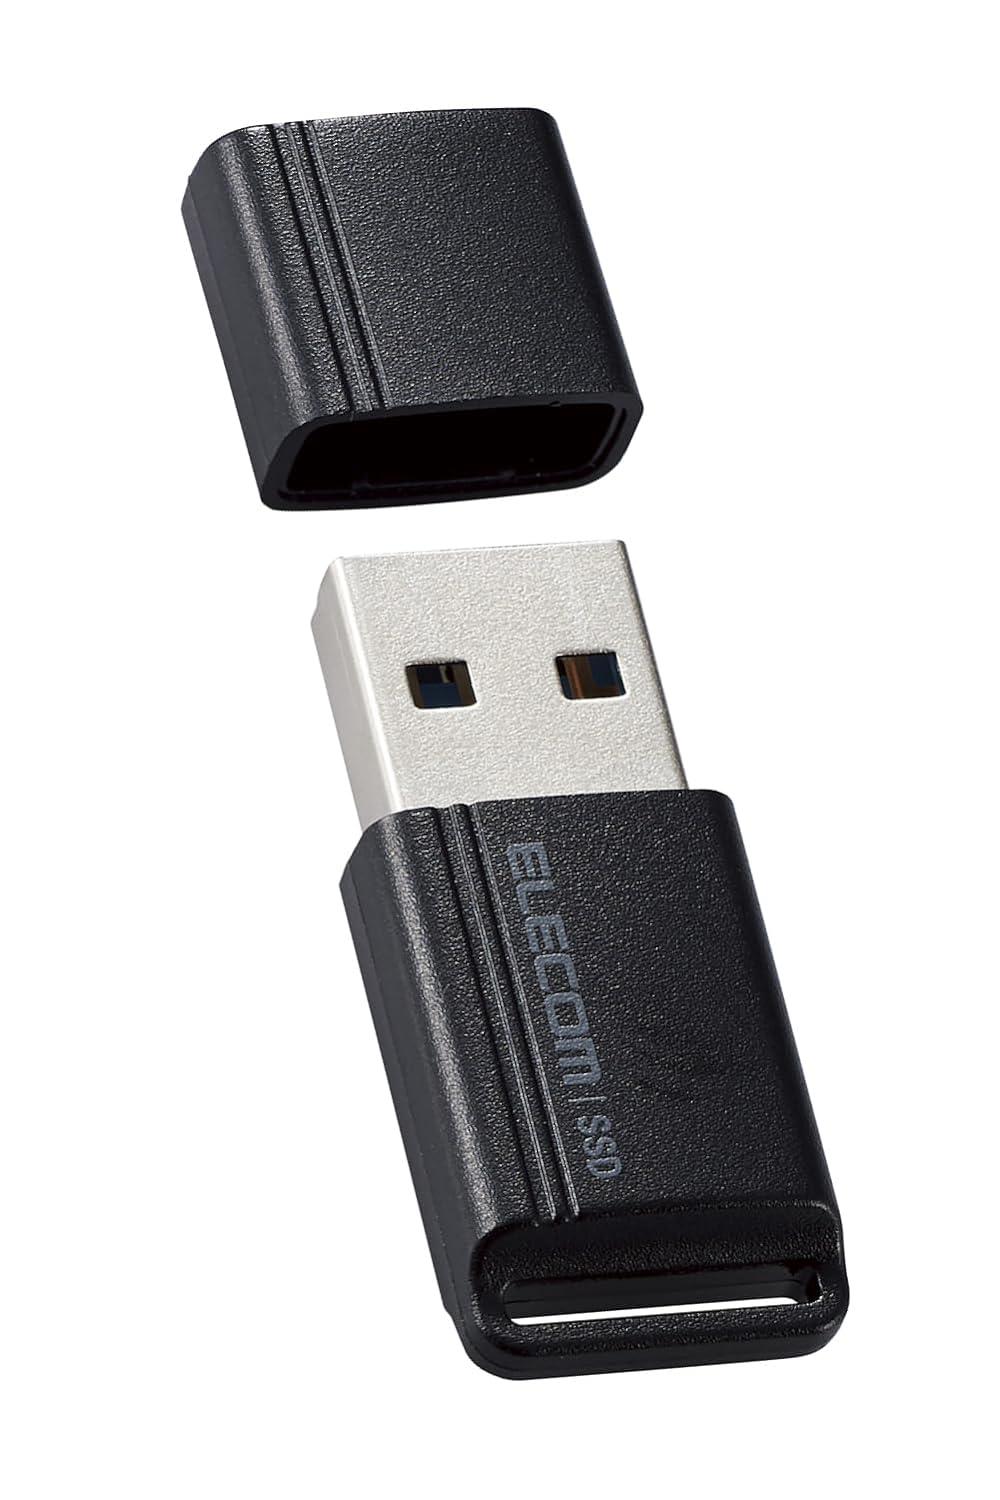 OtSSD/|[^u/USB3.2(Gen1)/^USB^/500GB/ubN(ESD-EXS0500GBK) ELECOM GR